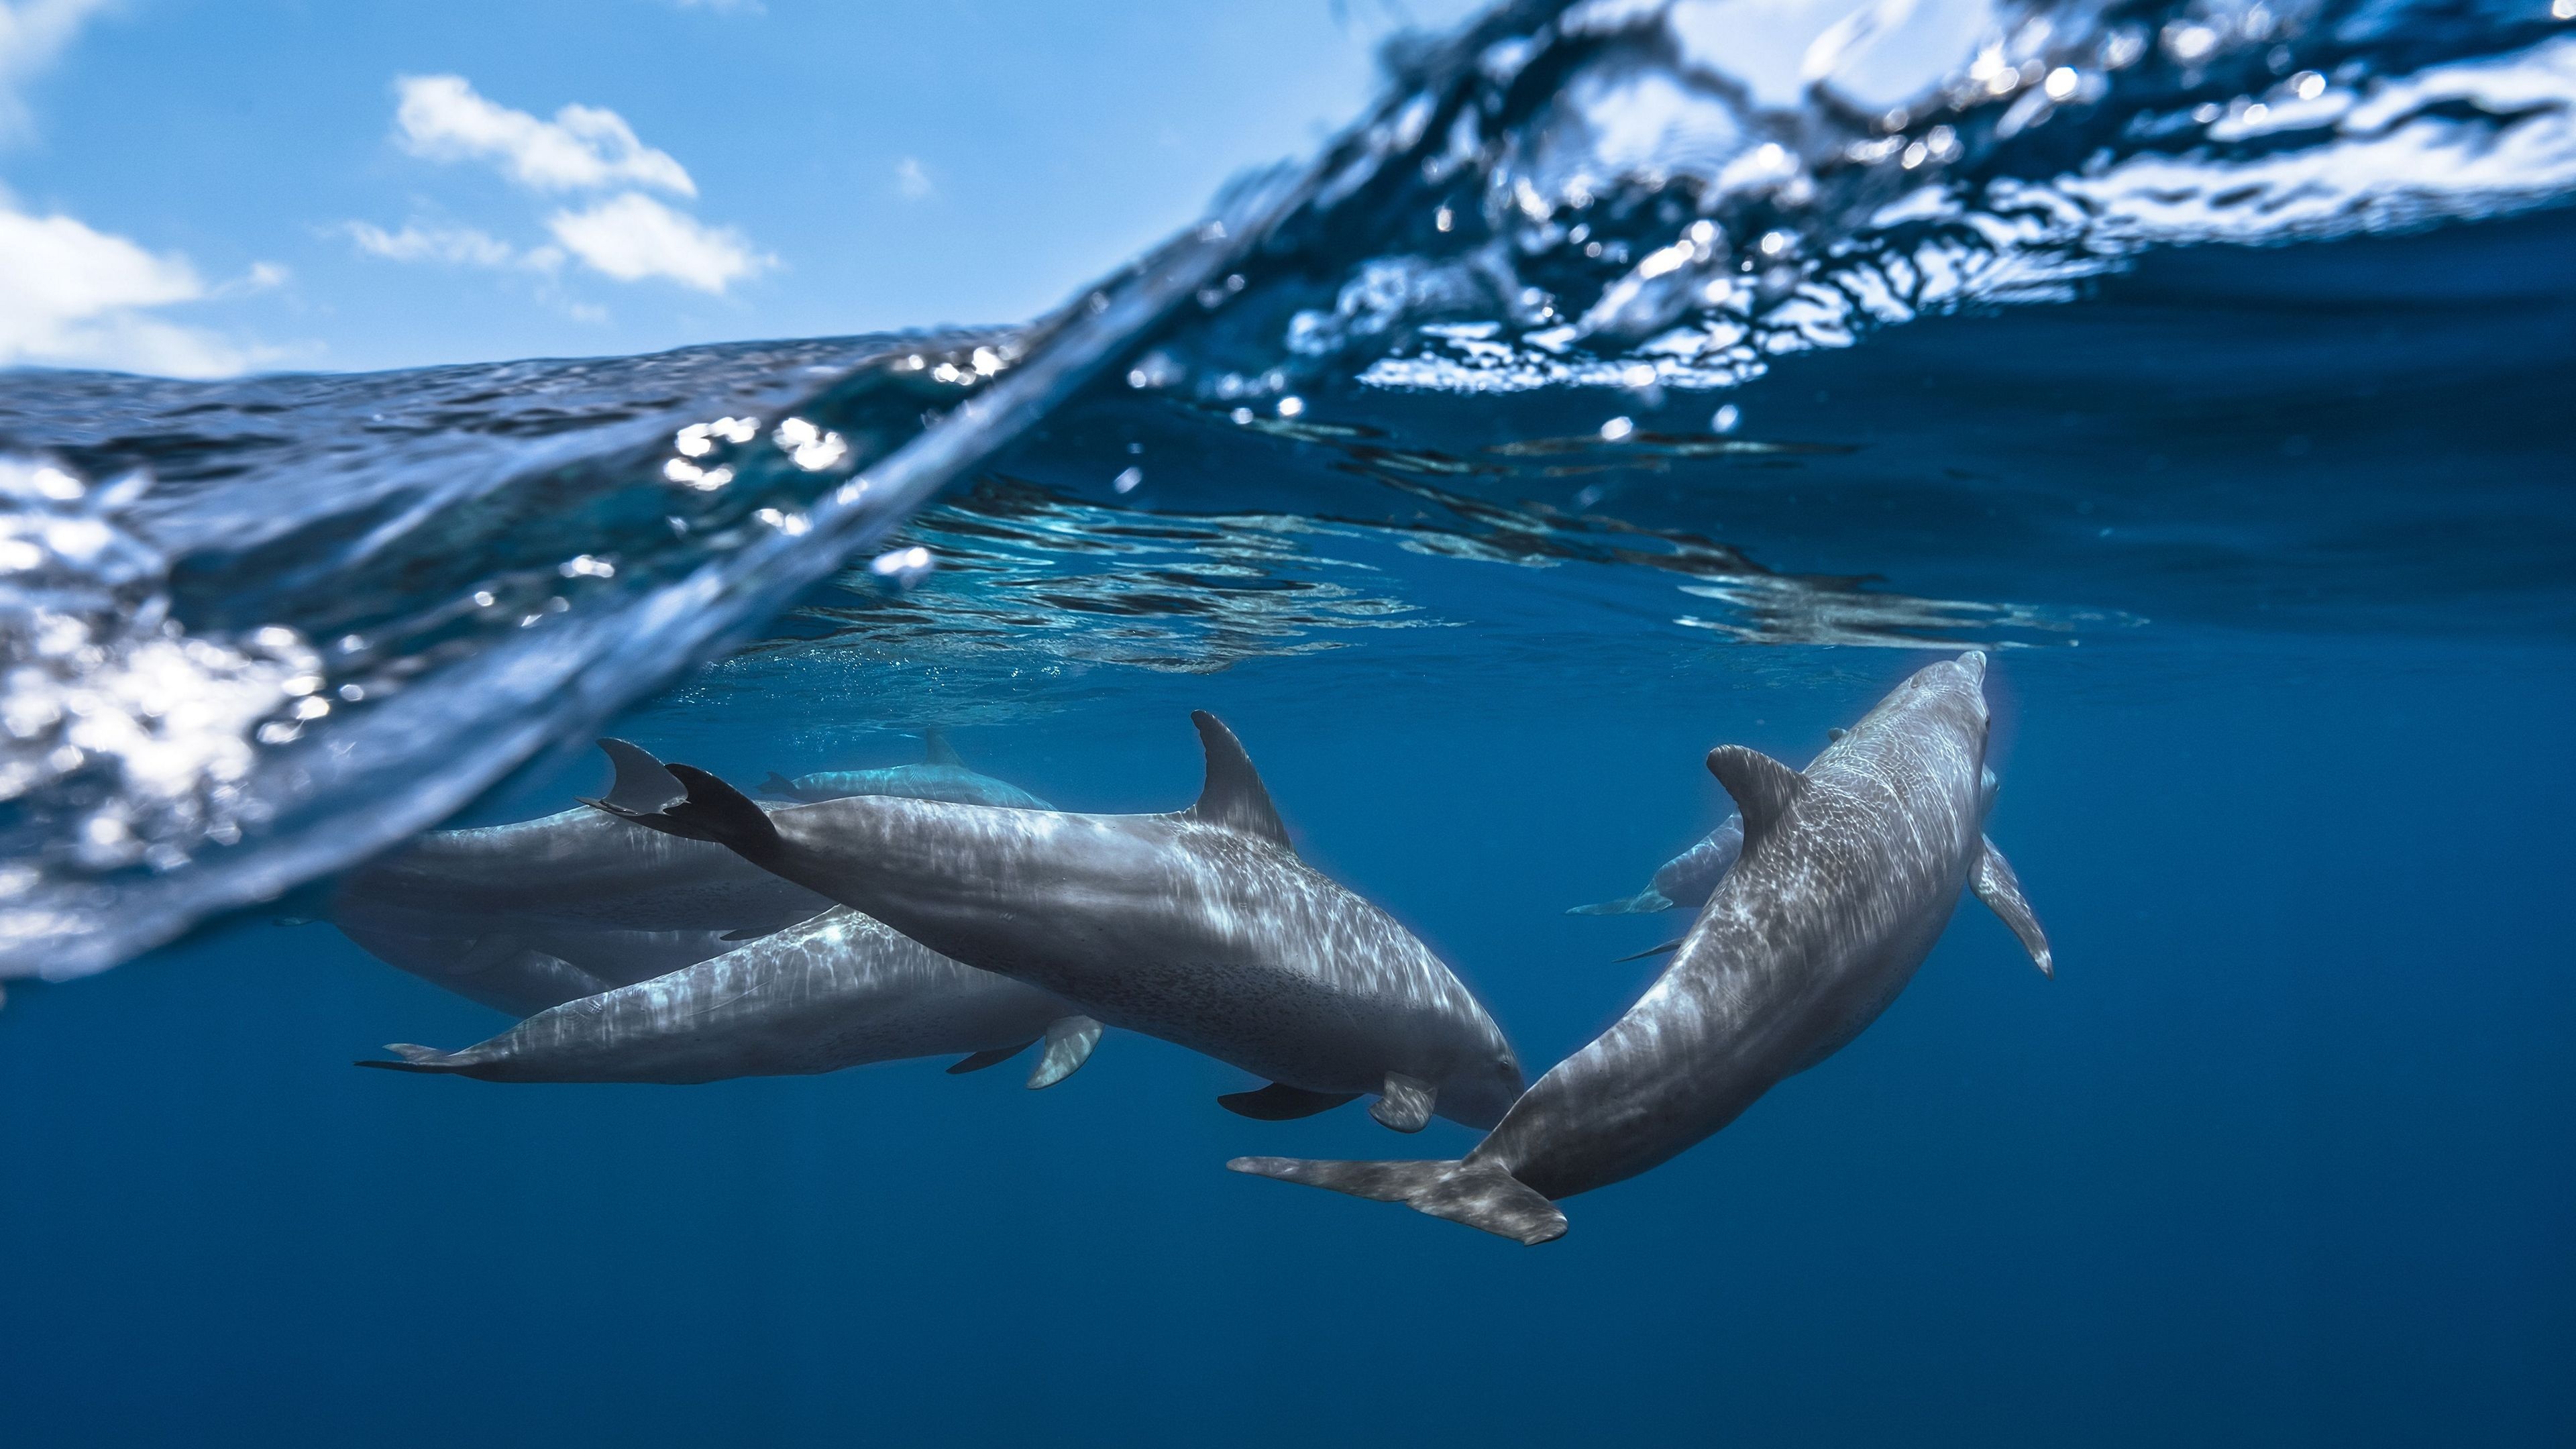 Dolphins in the ocean, Underwater wonderland, Playful marine creatures, Joyful moments, 3840x2160 4K Desktop